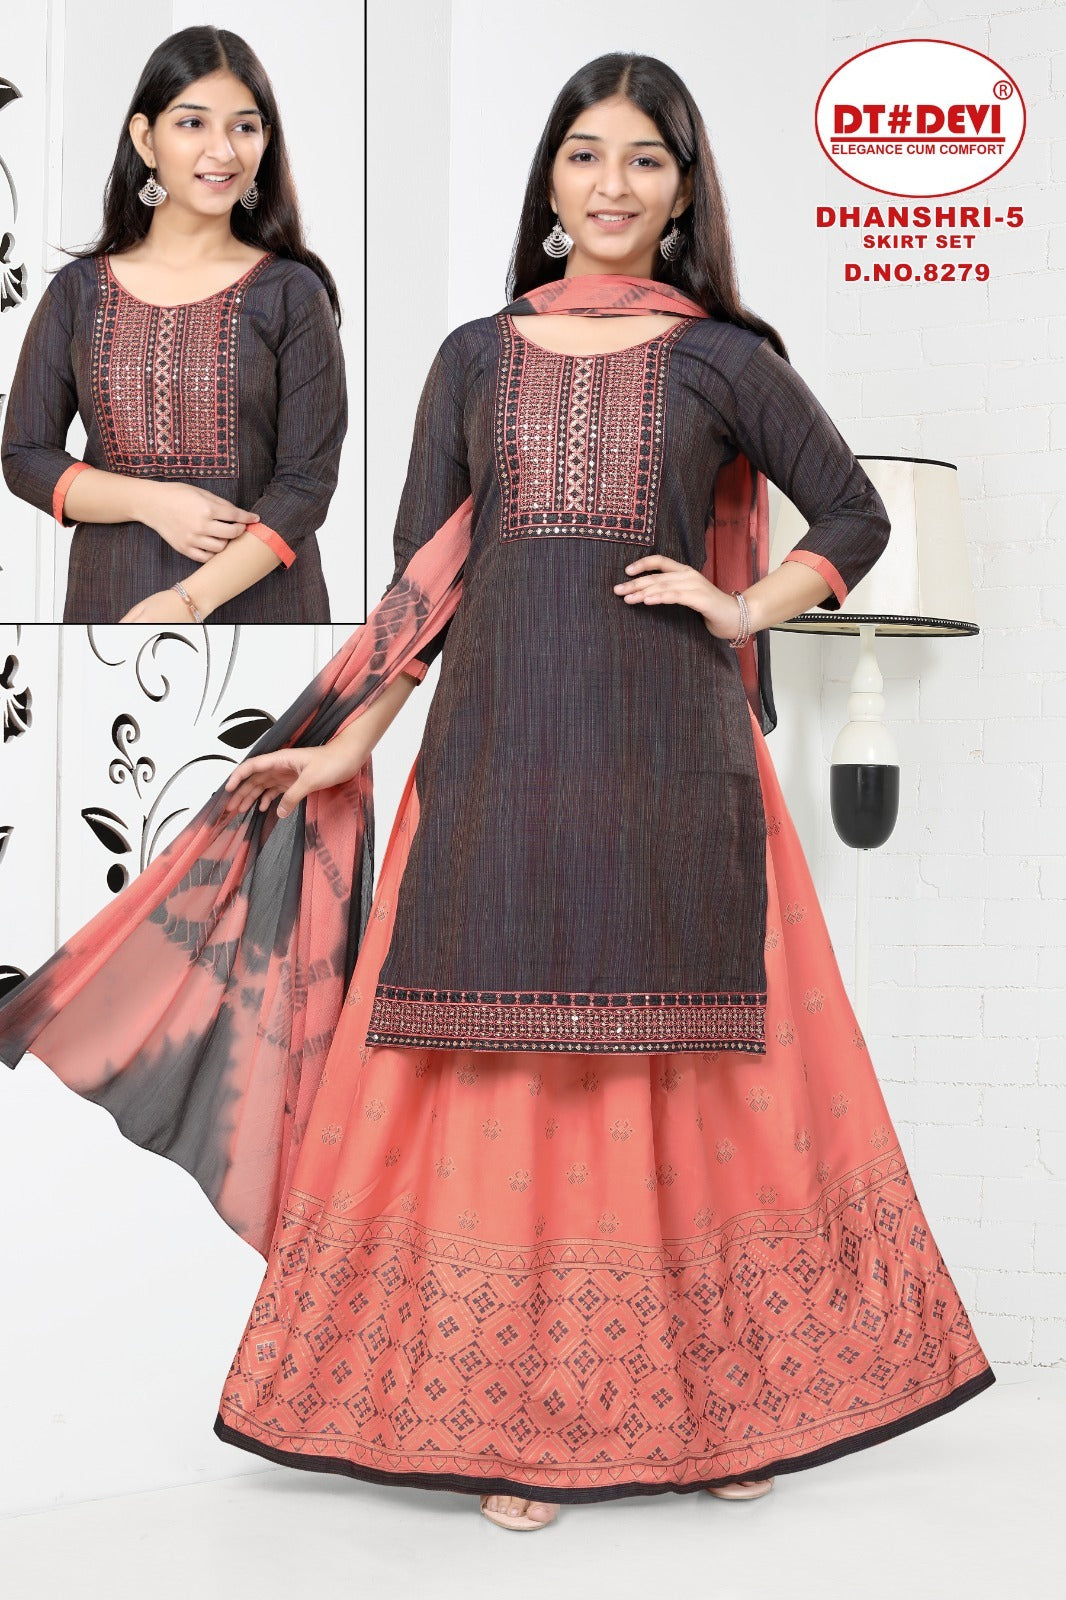 Dhanshri Vol 5-8279 Dt Devi Silk Readymade Skirt Style Suits